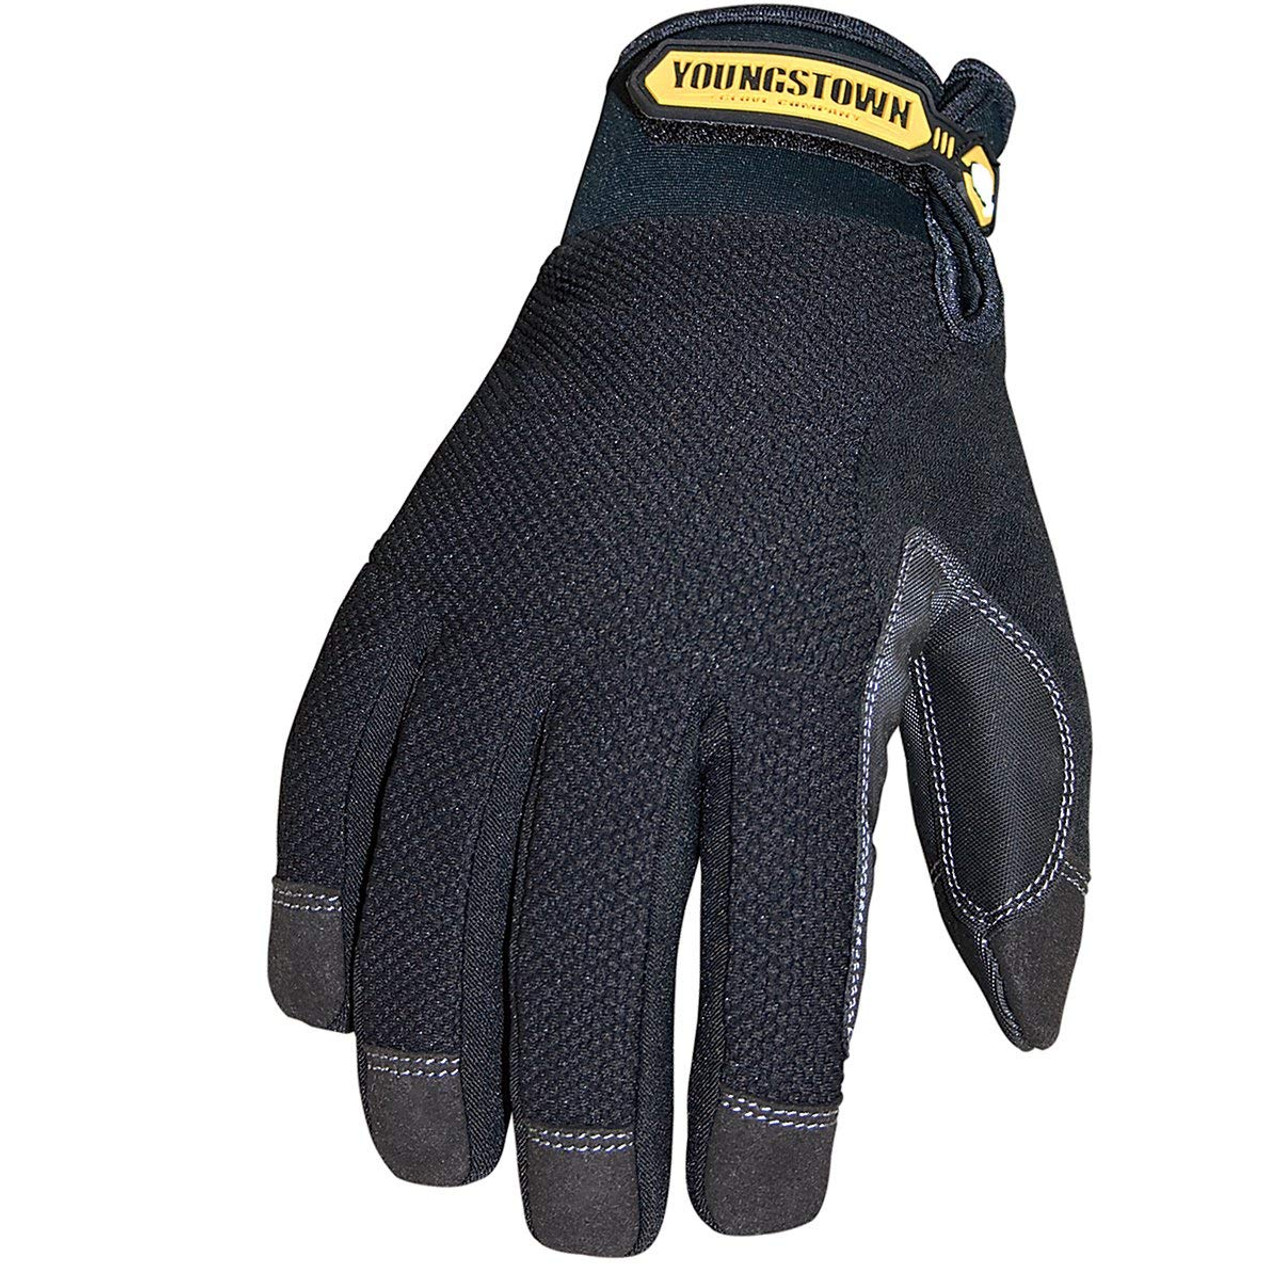 Youngstown Glove 03-3450-80-m 防水ウィンター プラス グローブ ミディアム、ブラック JBツール販売